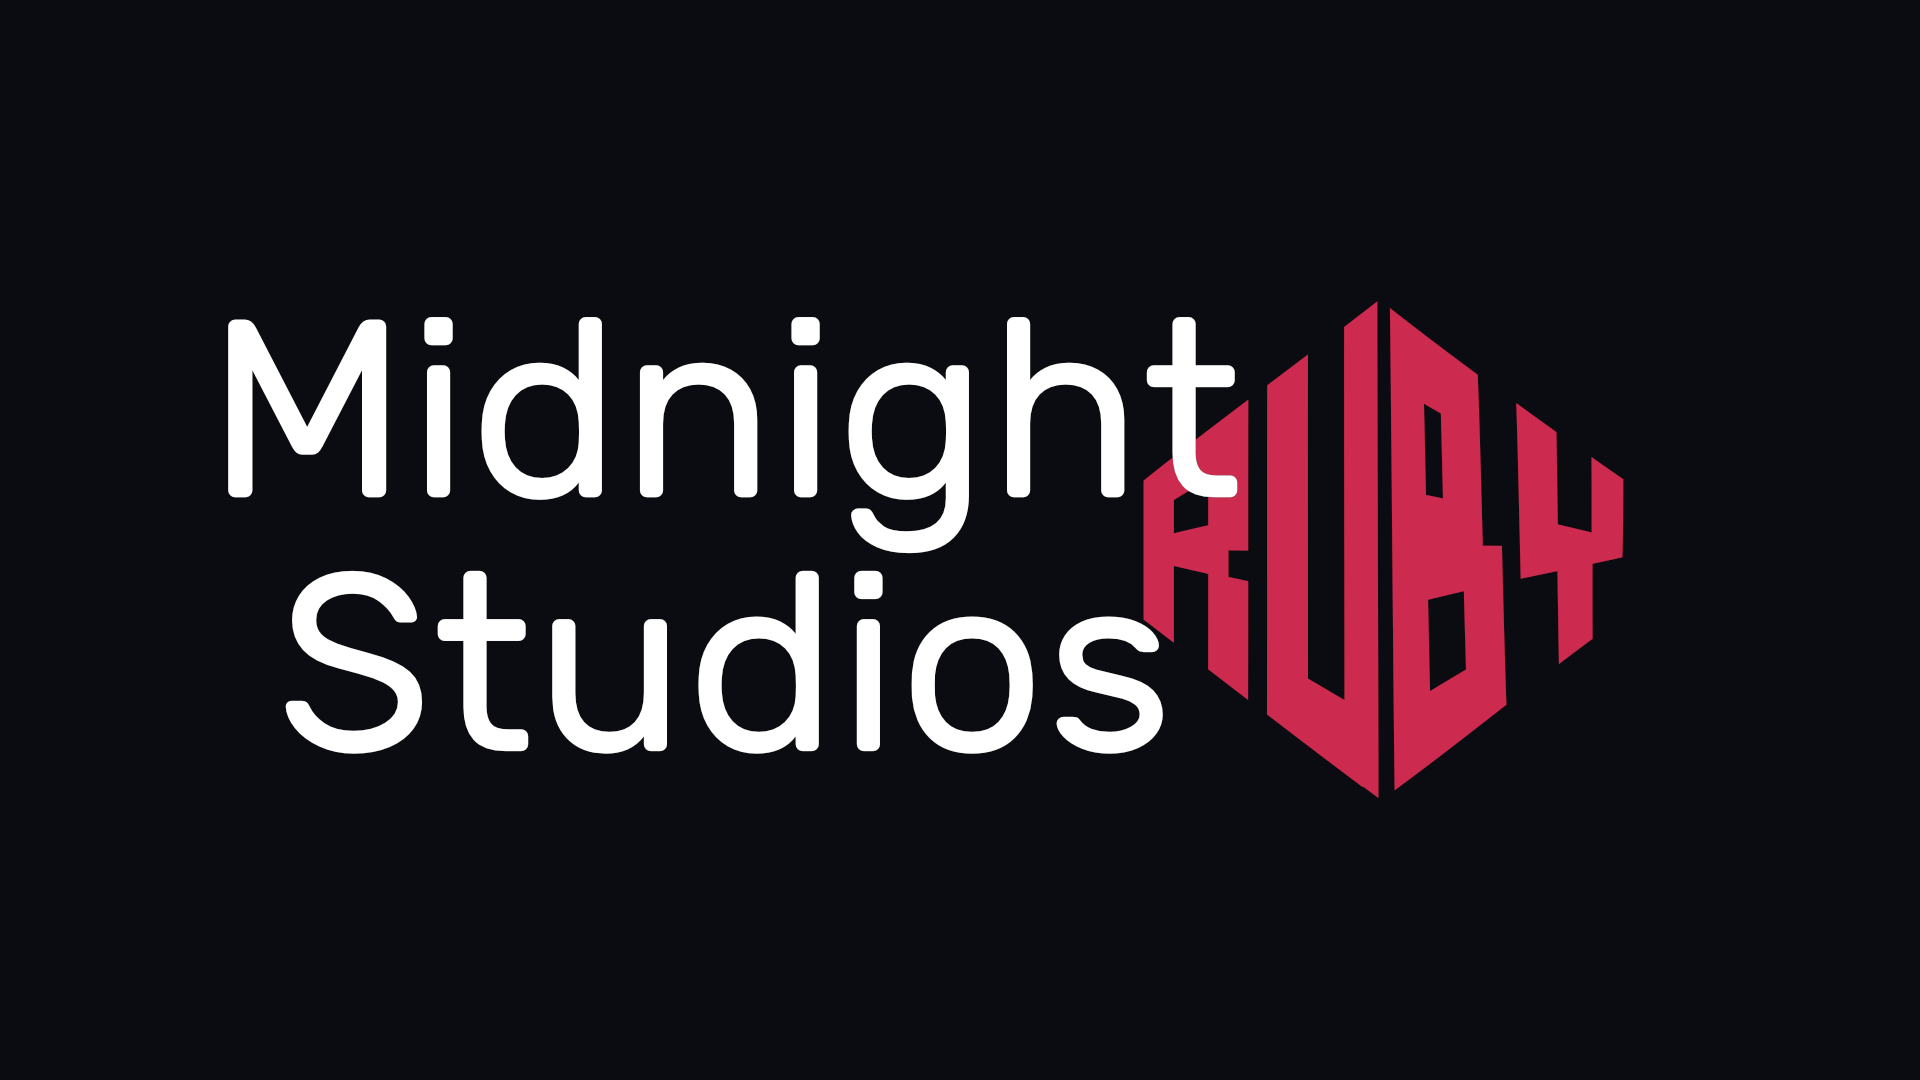 Midnight Ruby Studios